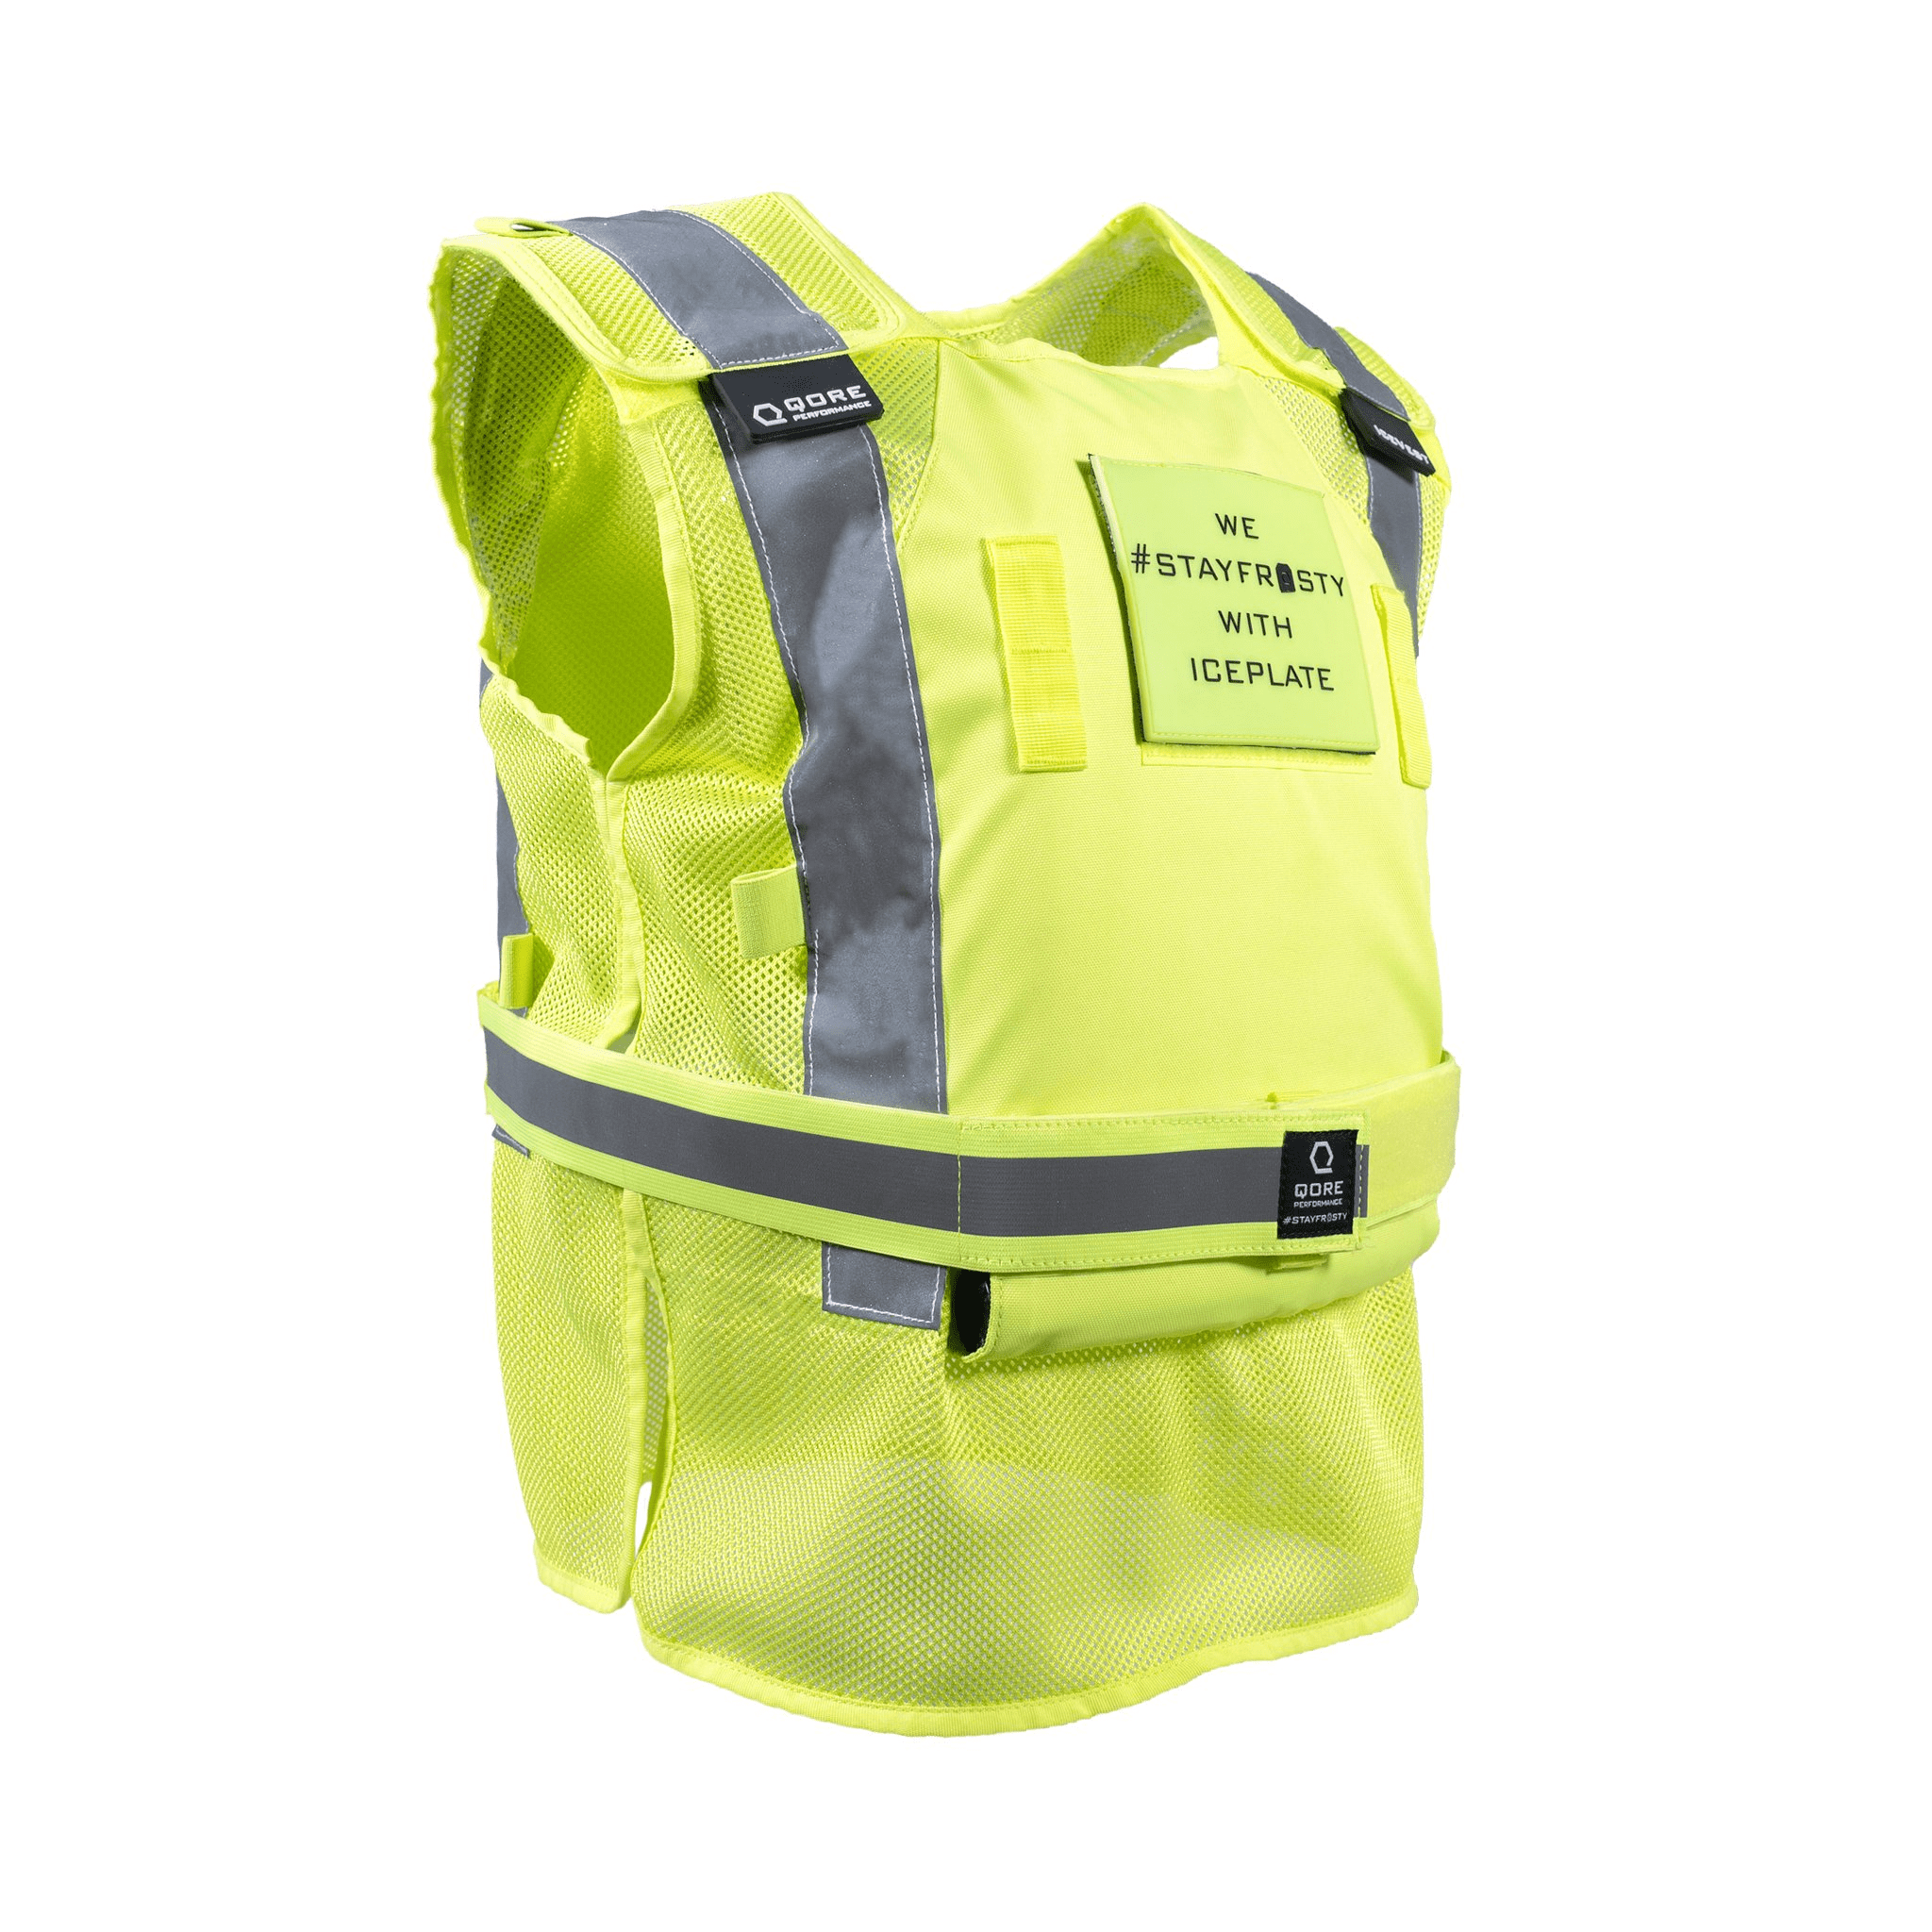 Blue Color Reflective Safety Vest for Women Men High Visibility